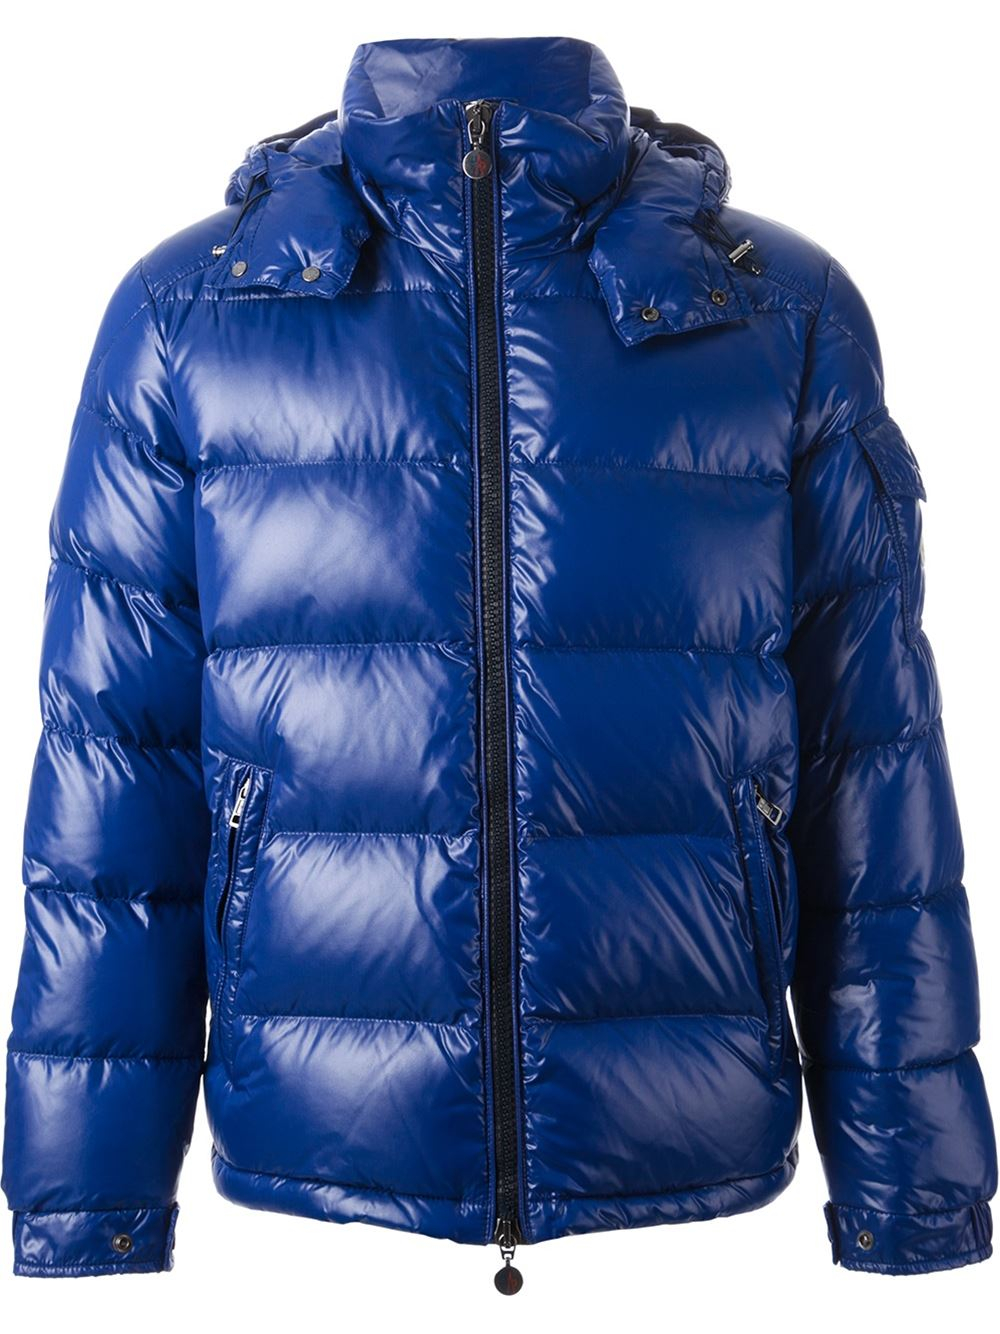 Moncler Maya Padded Jacket in Blue for Men - Lyst